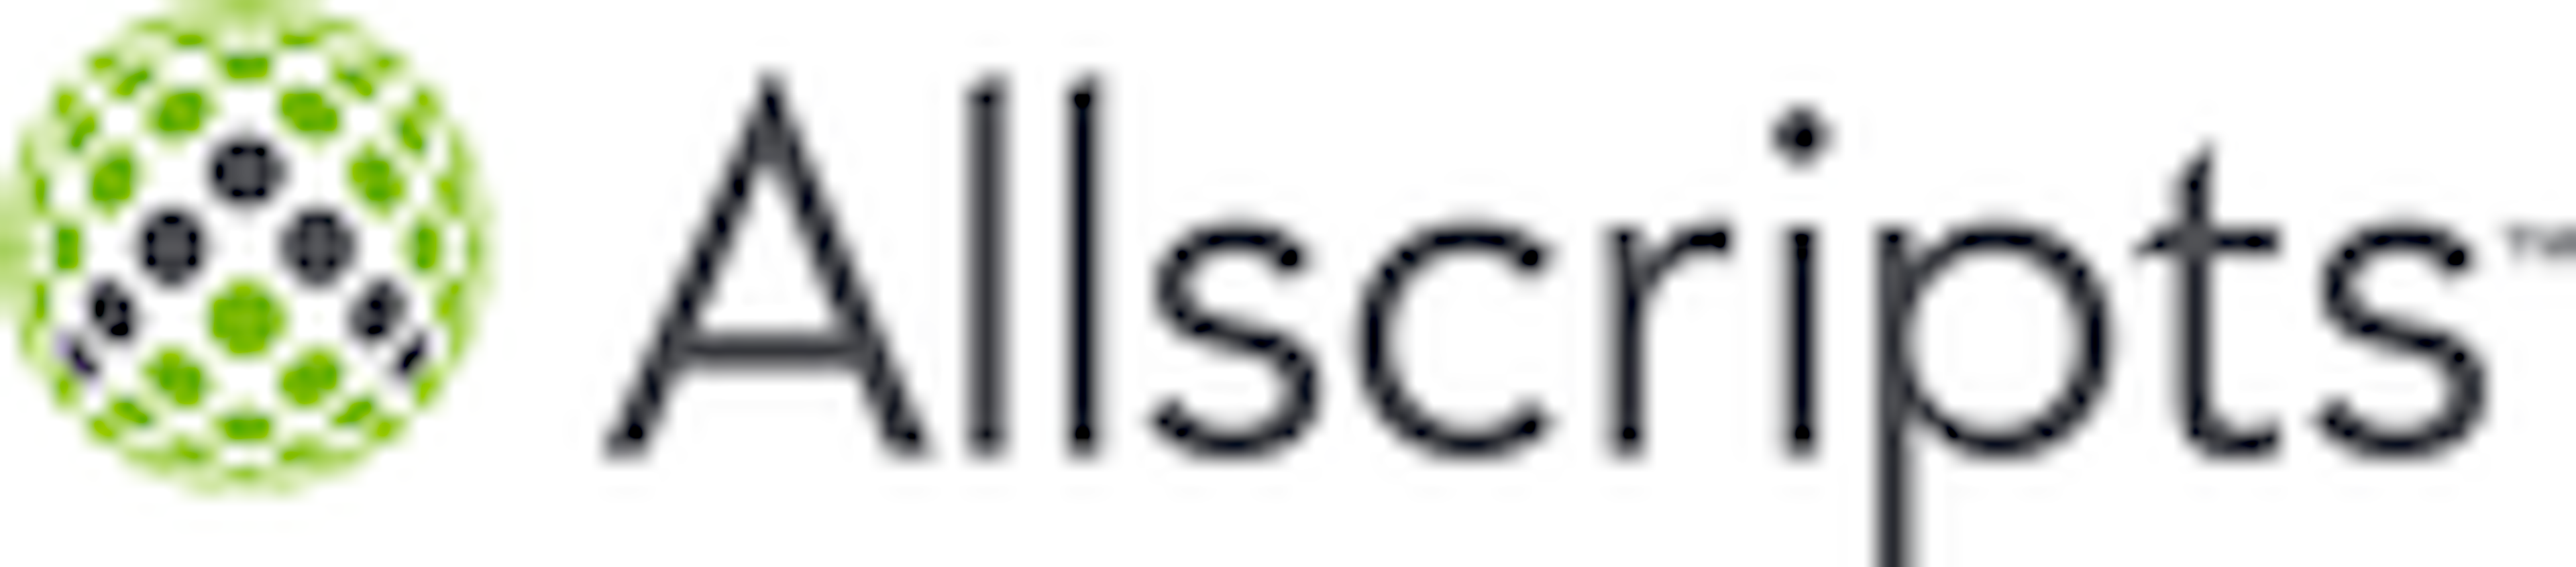 Allscripts Practice Management Logo